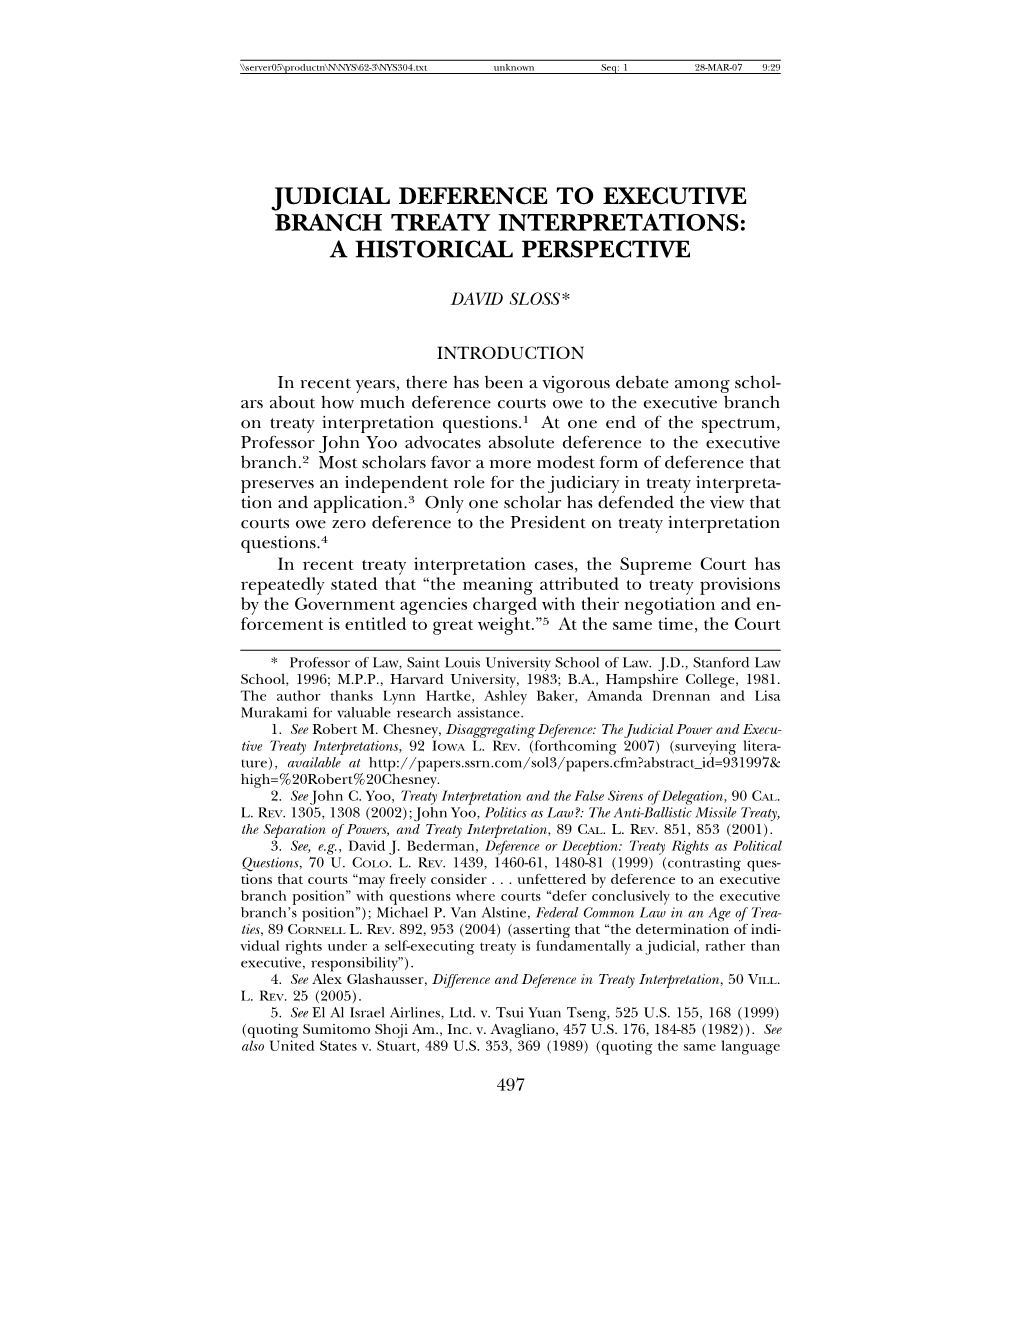 Judicial Deference to Executive Branch Treaty Interpretations: a Historical Perspective